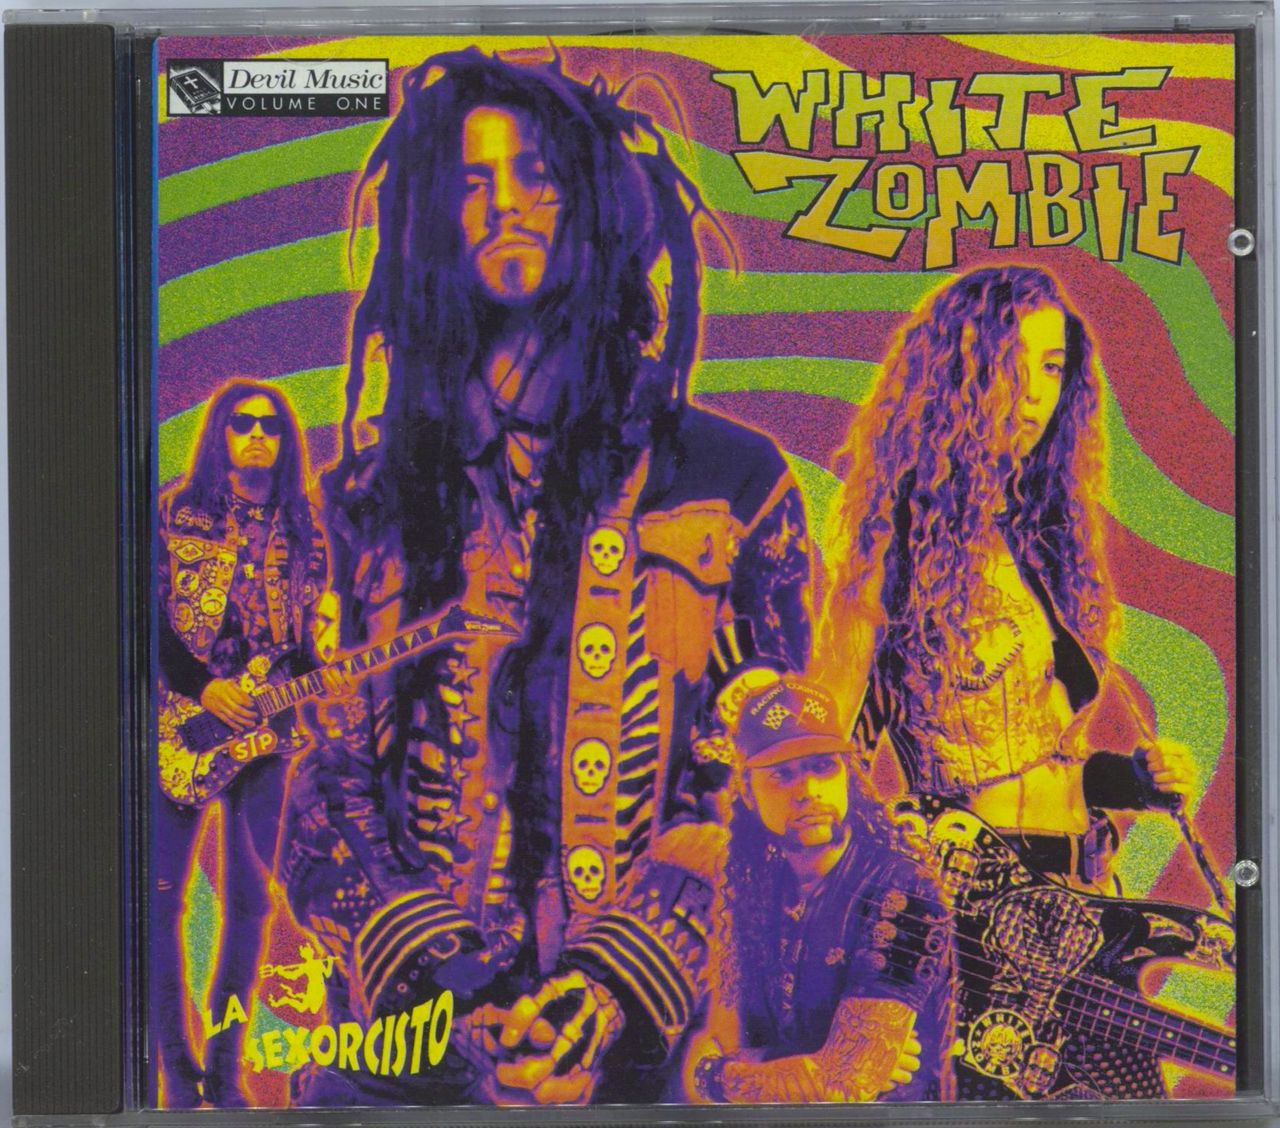 White Zombie La Sexorcisto: Devil Music Vol. 1 + Patch US CD album 